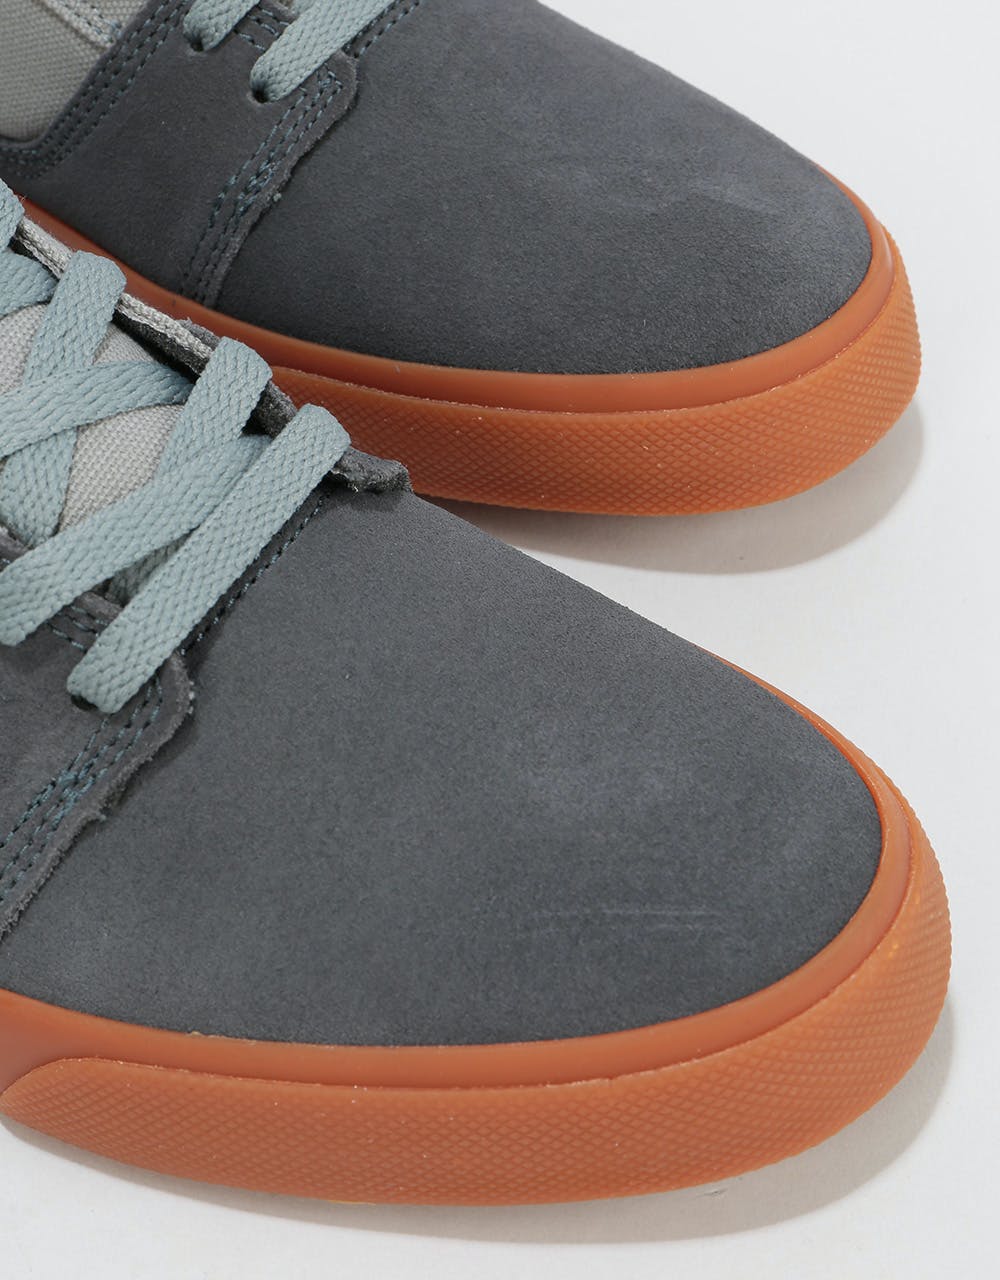 DC Tonik Skate Shoes - Grey/Light Grey